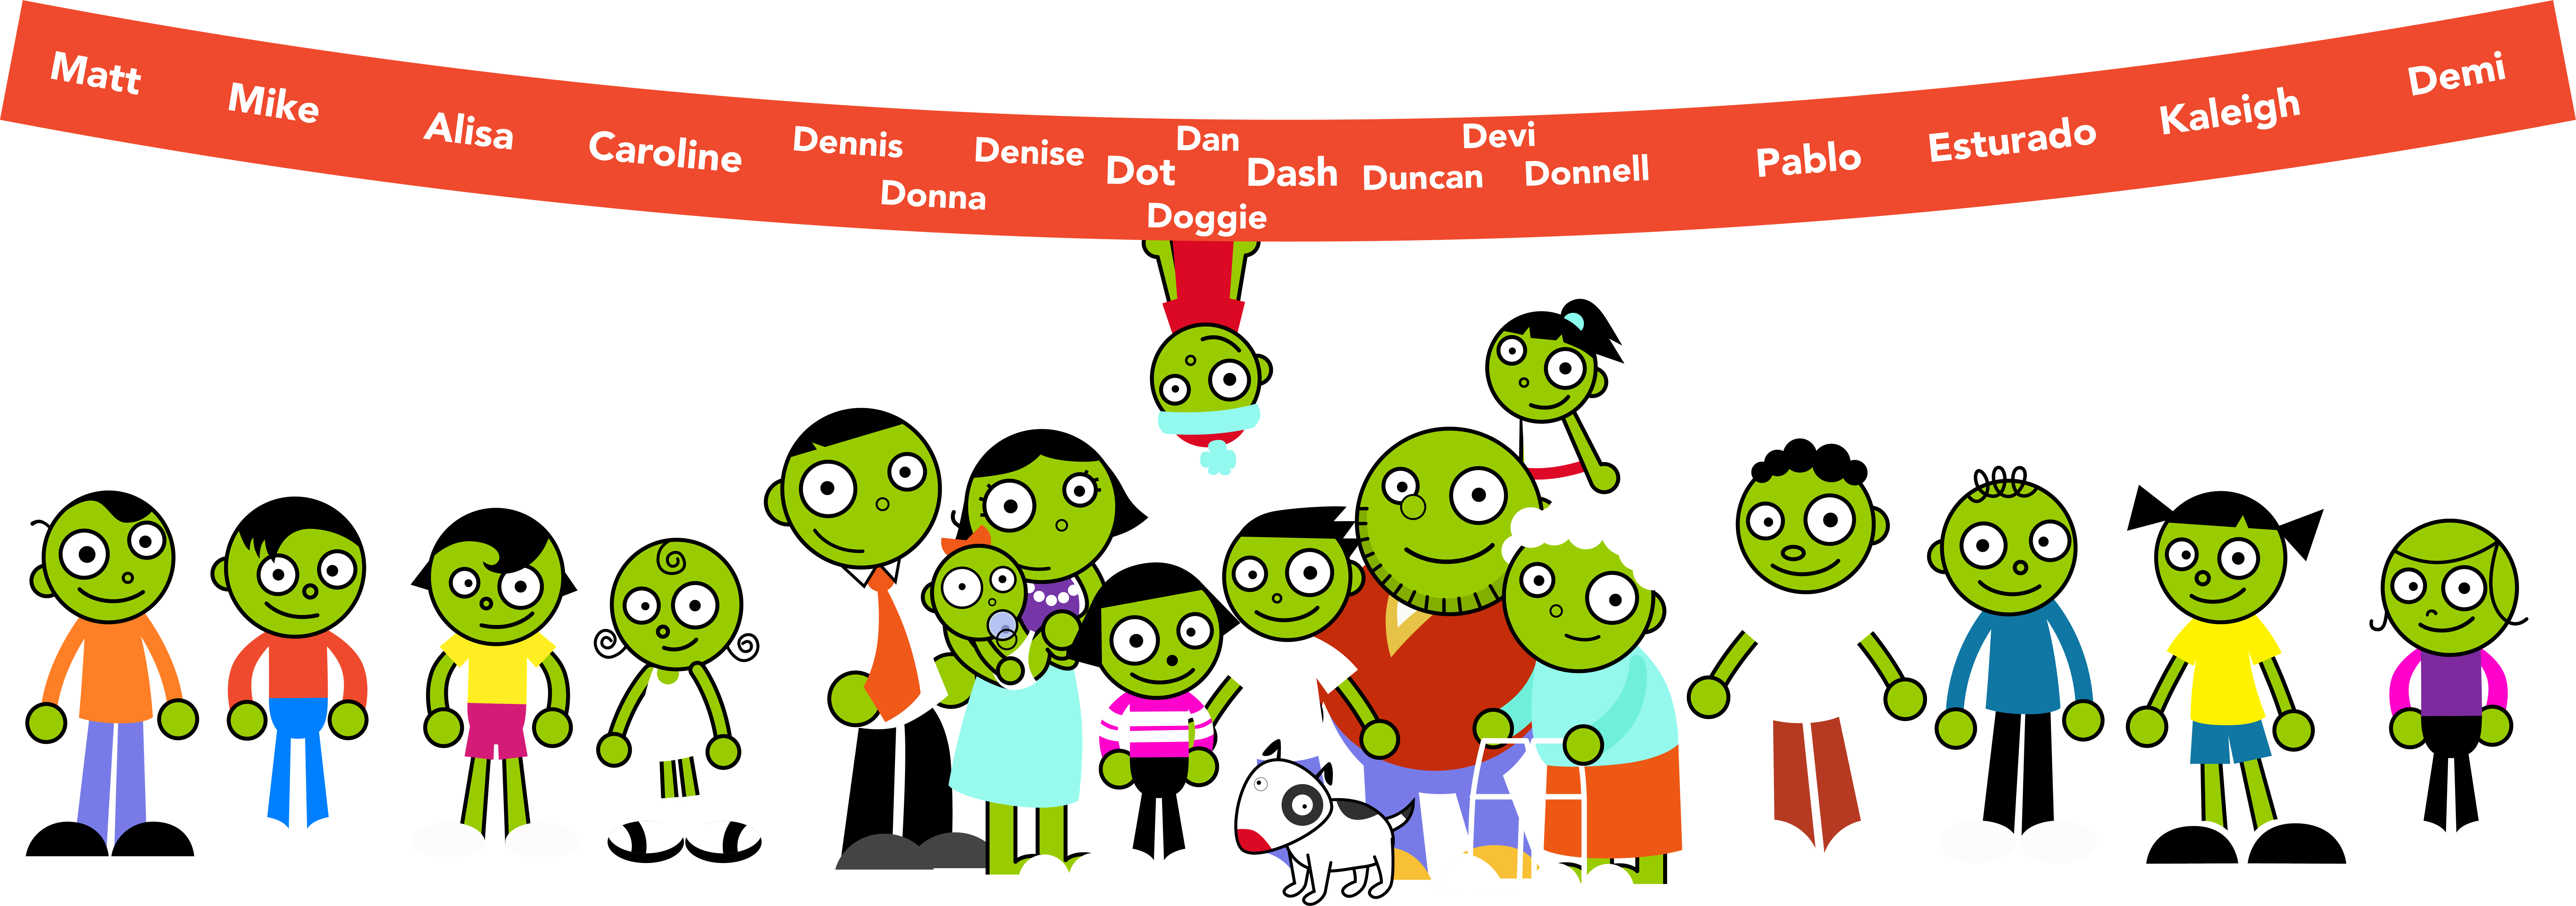 PBS Kids Digital Art - Dash and Dot's Family Photo by LuxoVeggieDude9302 on  DeviantArt